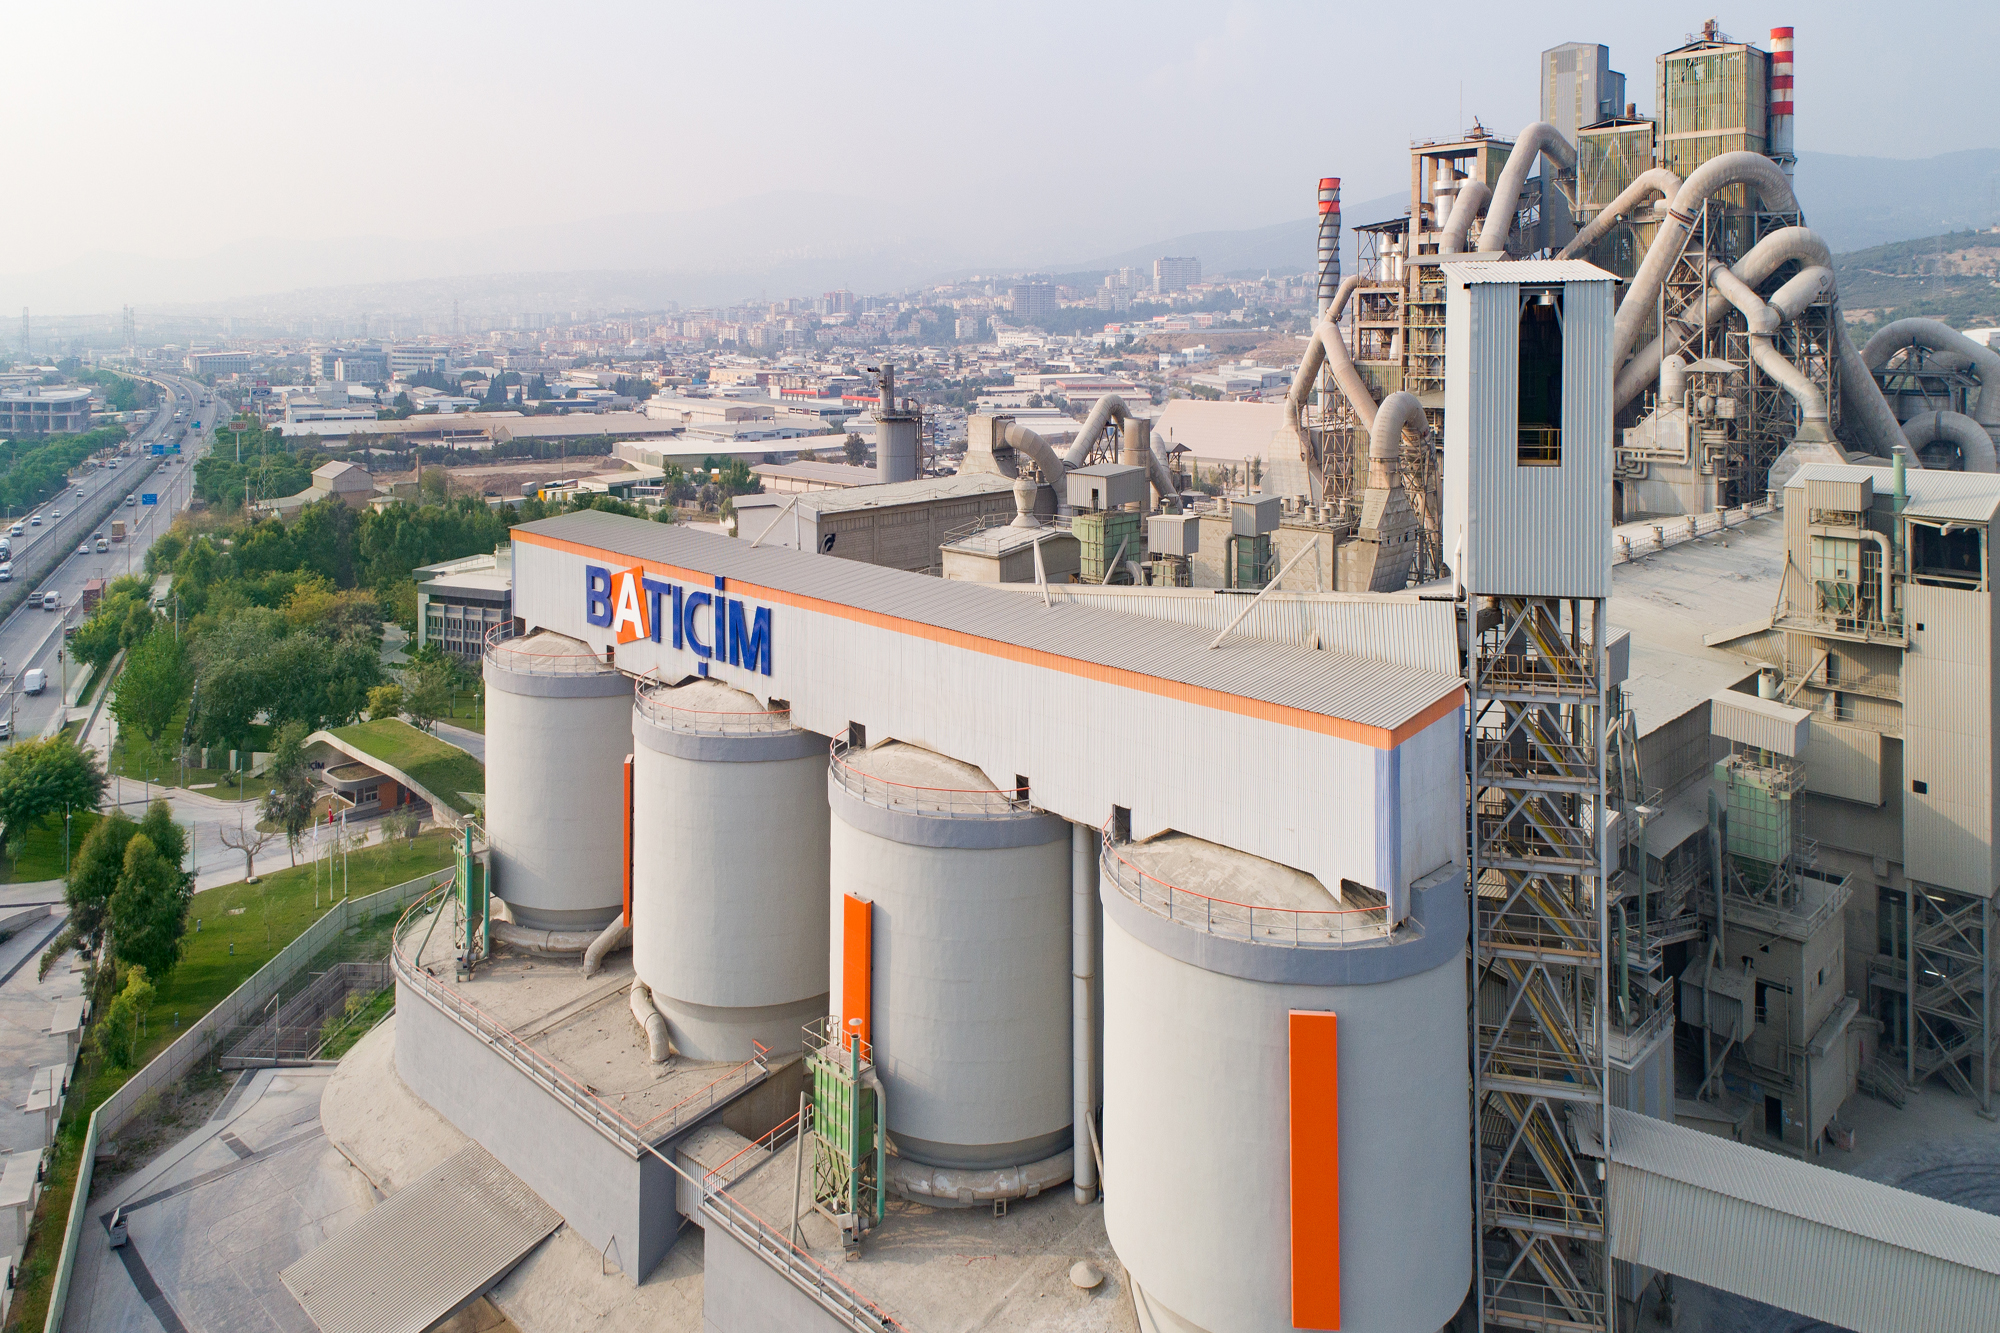 Batıçim - Cement Industry Company in Turkey